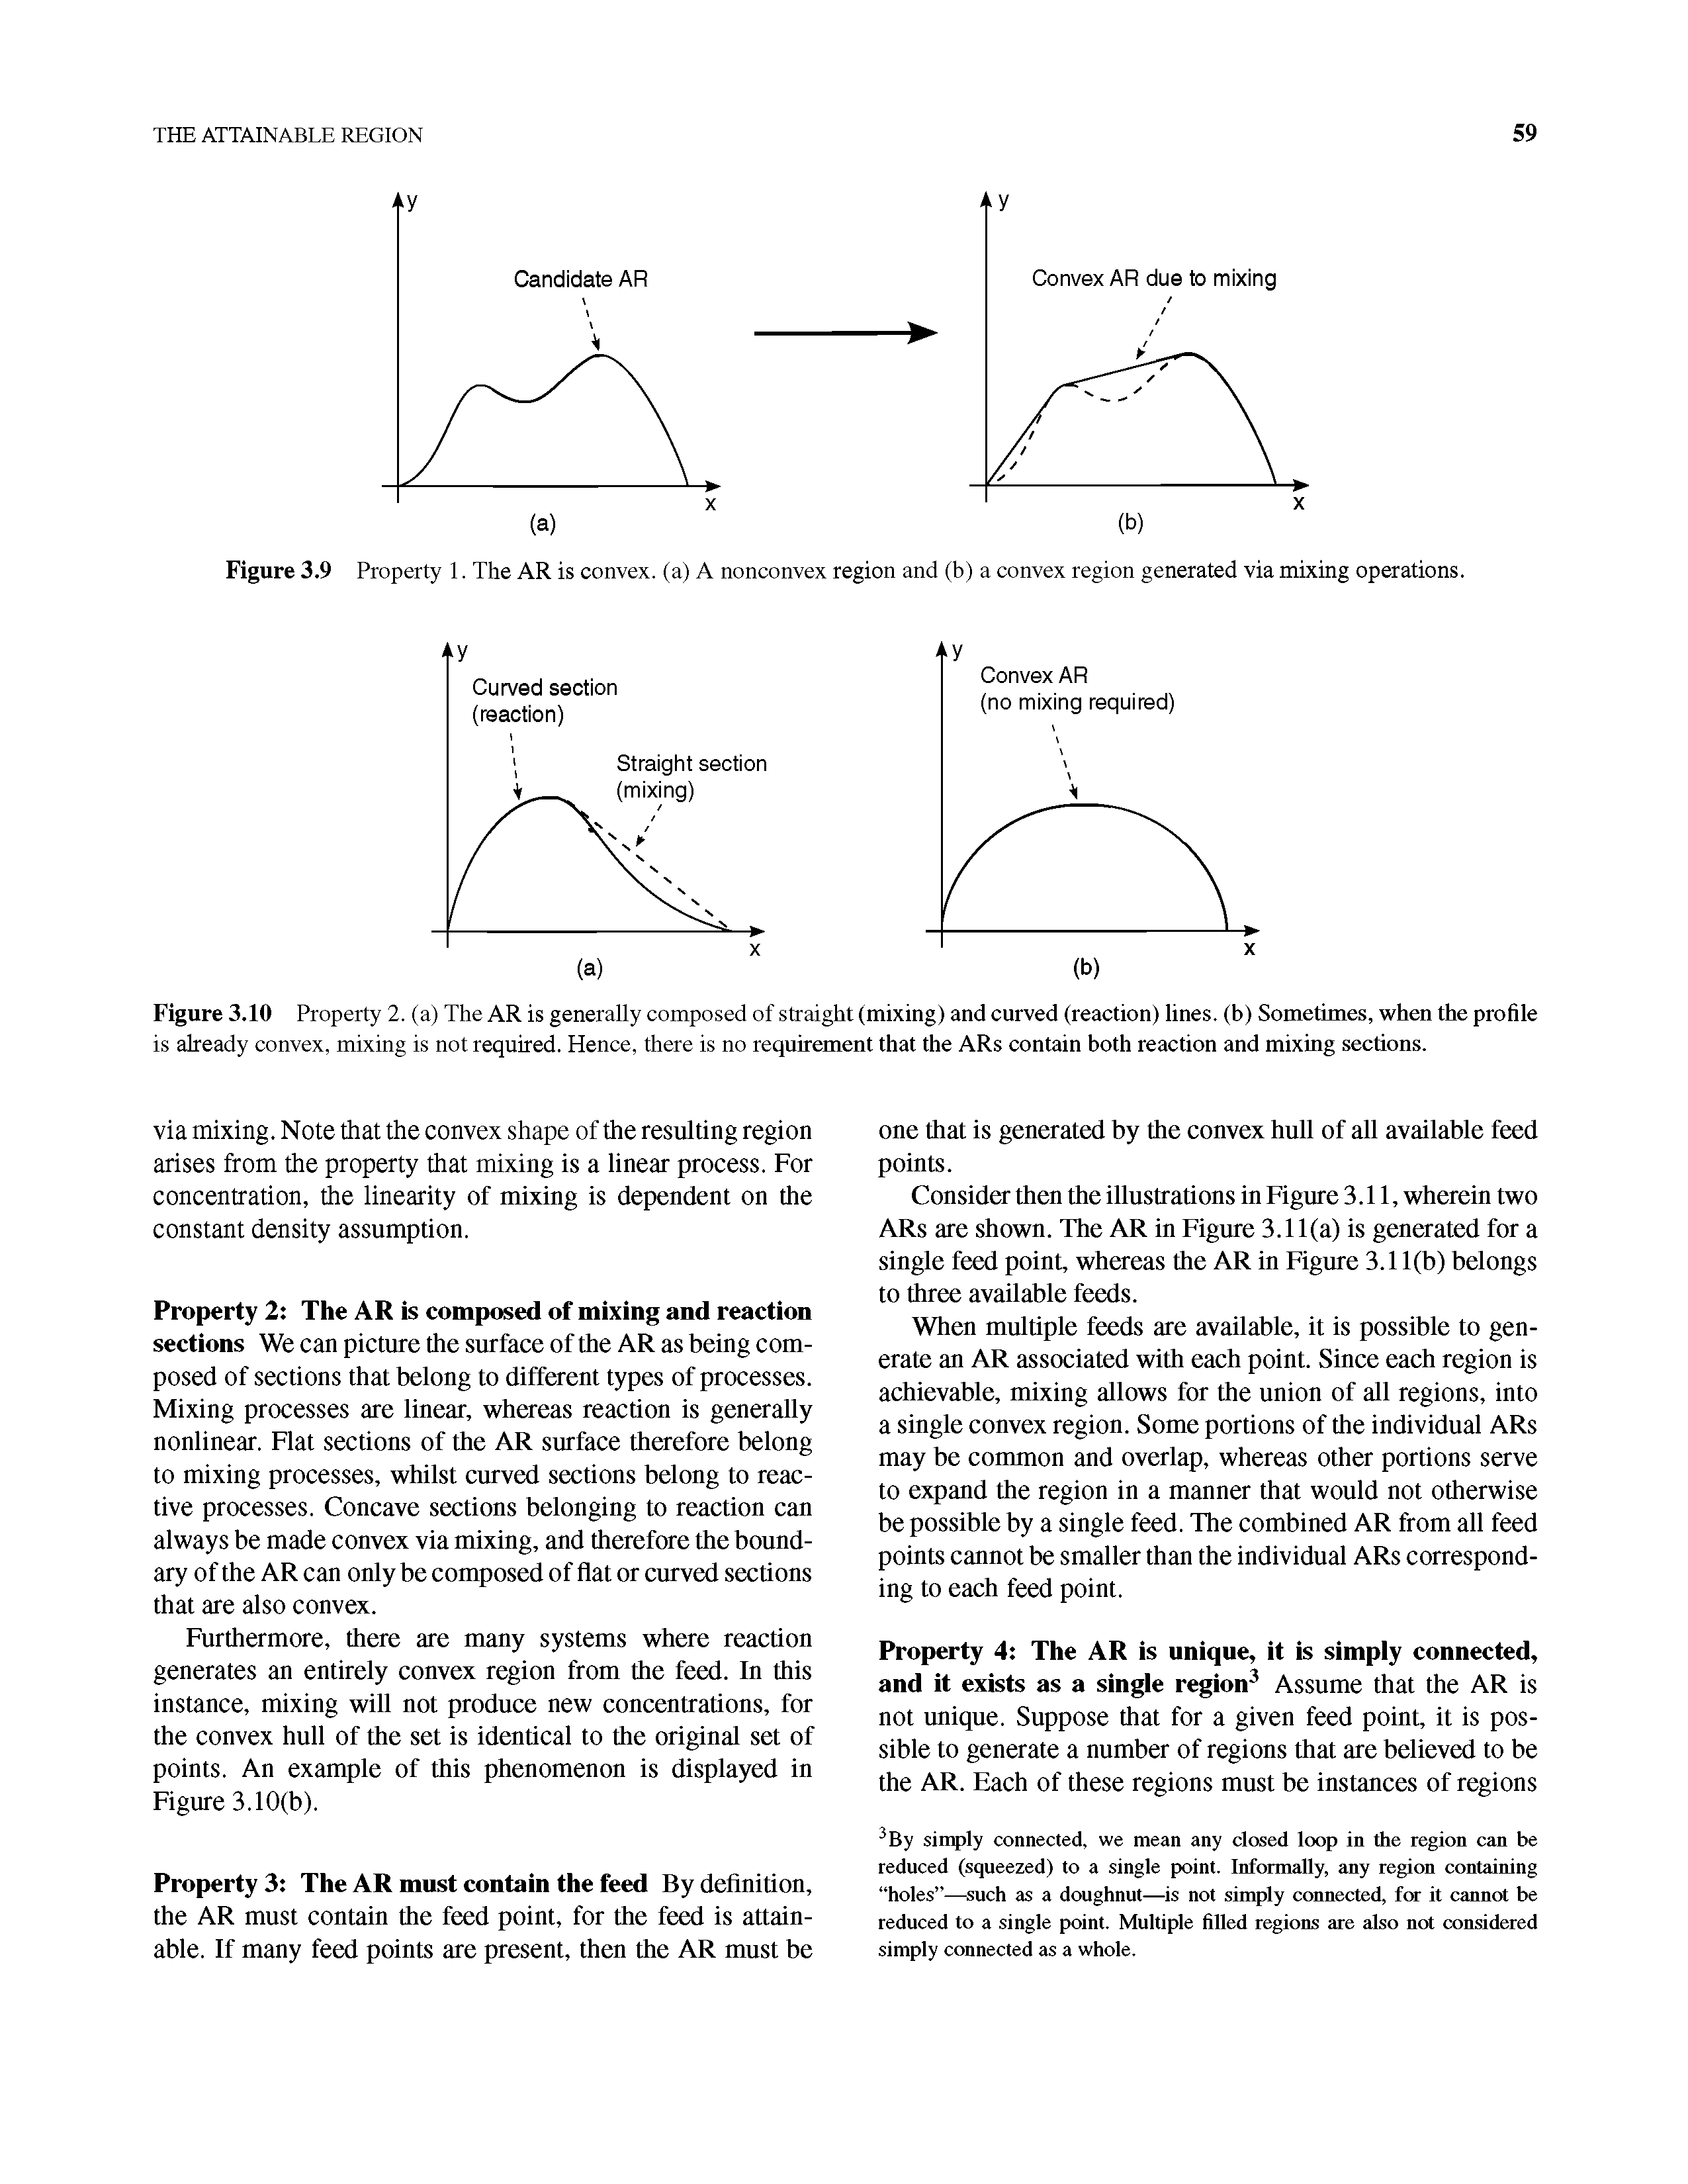 Figure 3.9 Property 1. The AR is convex, (a) A nonconvex region and (b) a convex region generated via mixing operations.